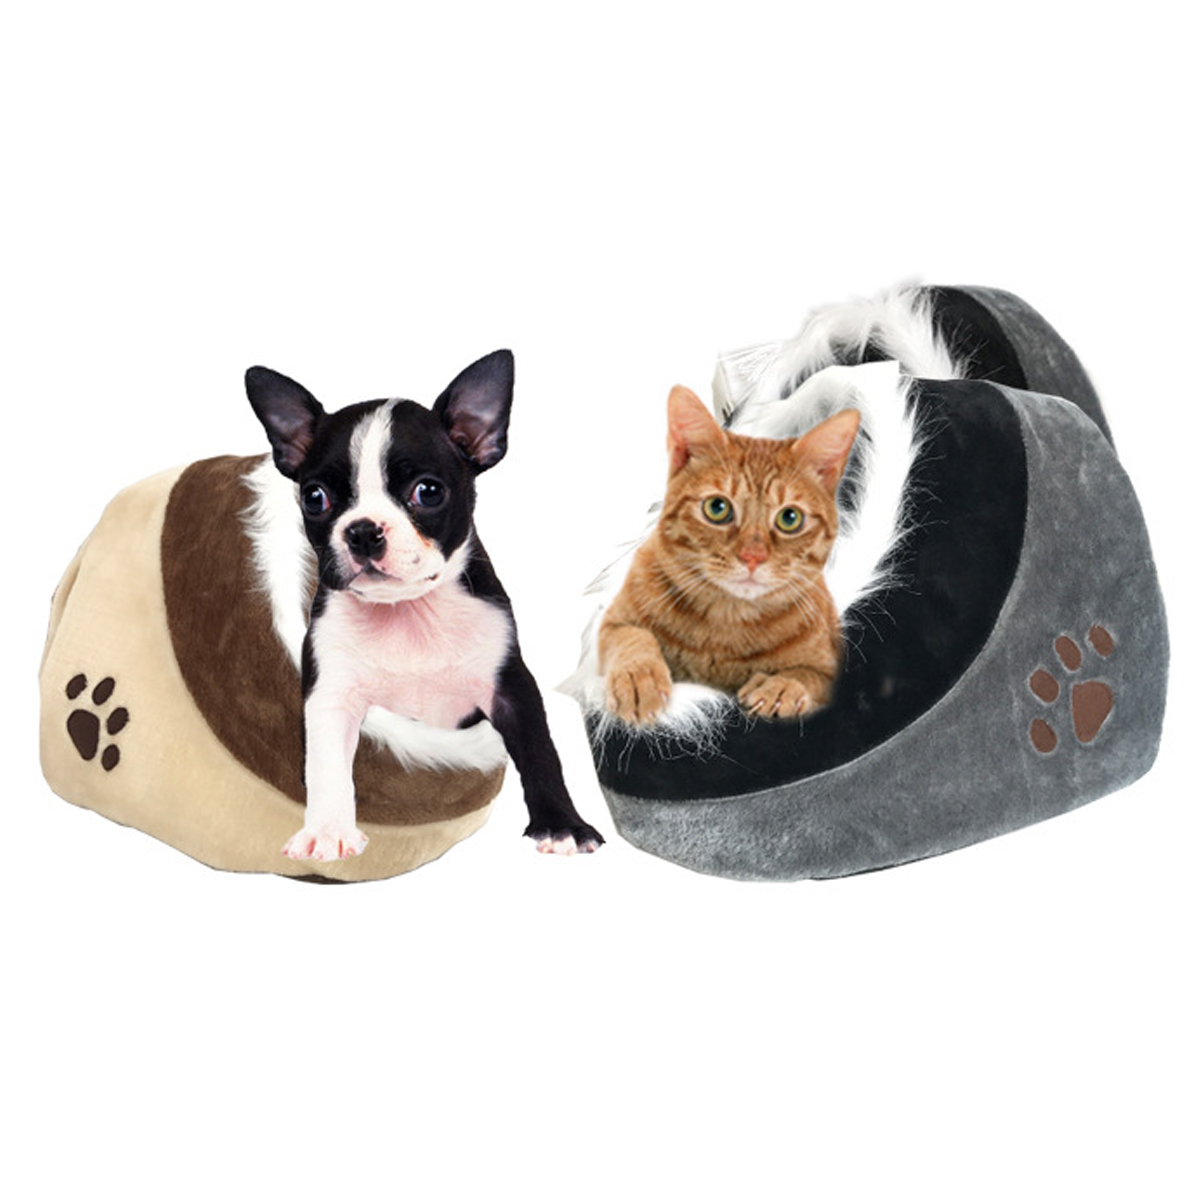 Warm-Igloo-Sleeping-Pet-Bed-House-Cushion-Nest-For-Dog-Puppy-Cat-K-itten-1518227-1